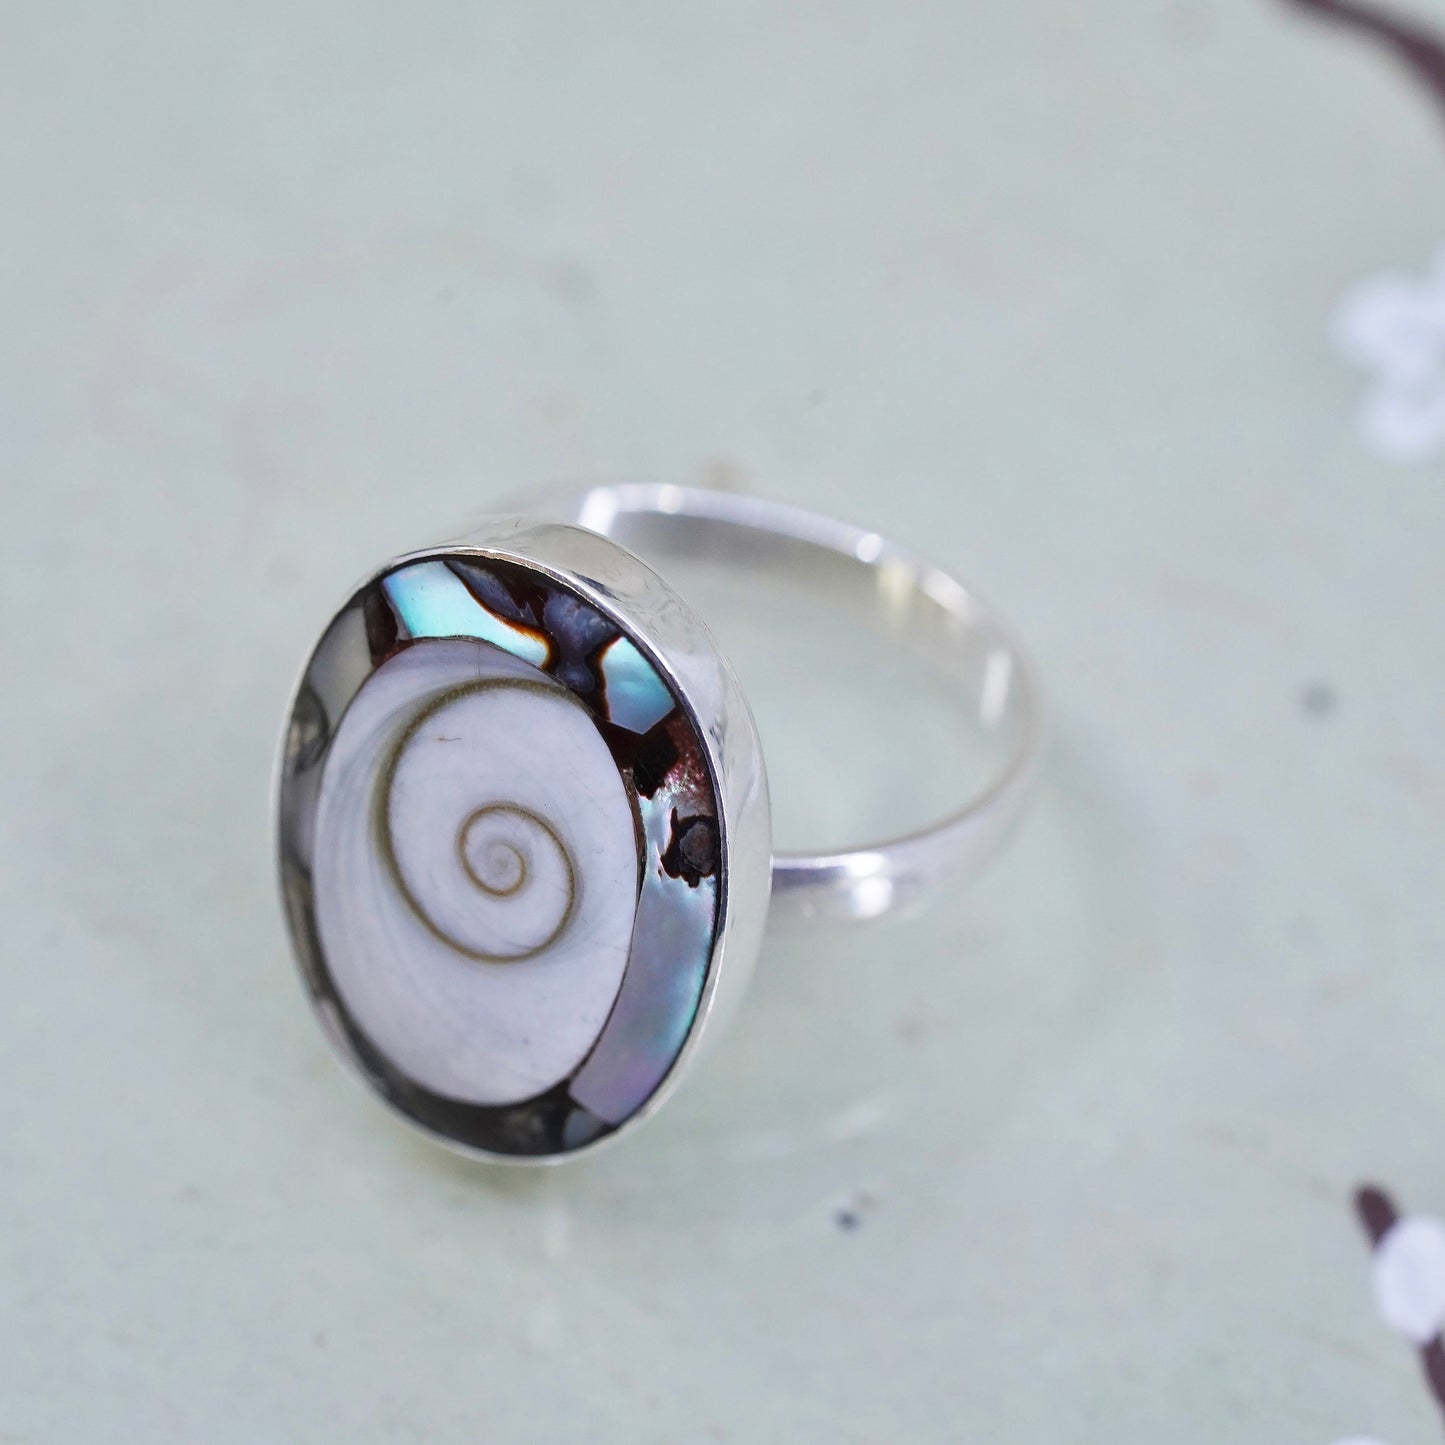 Size 7, Vintage sterling silver ring, handmade 925 band shiva eye snail shell